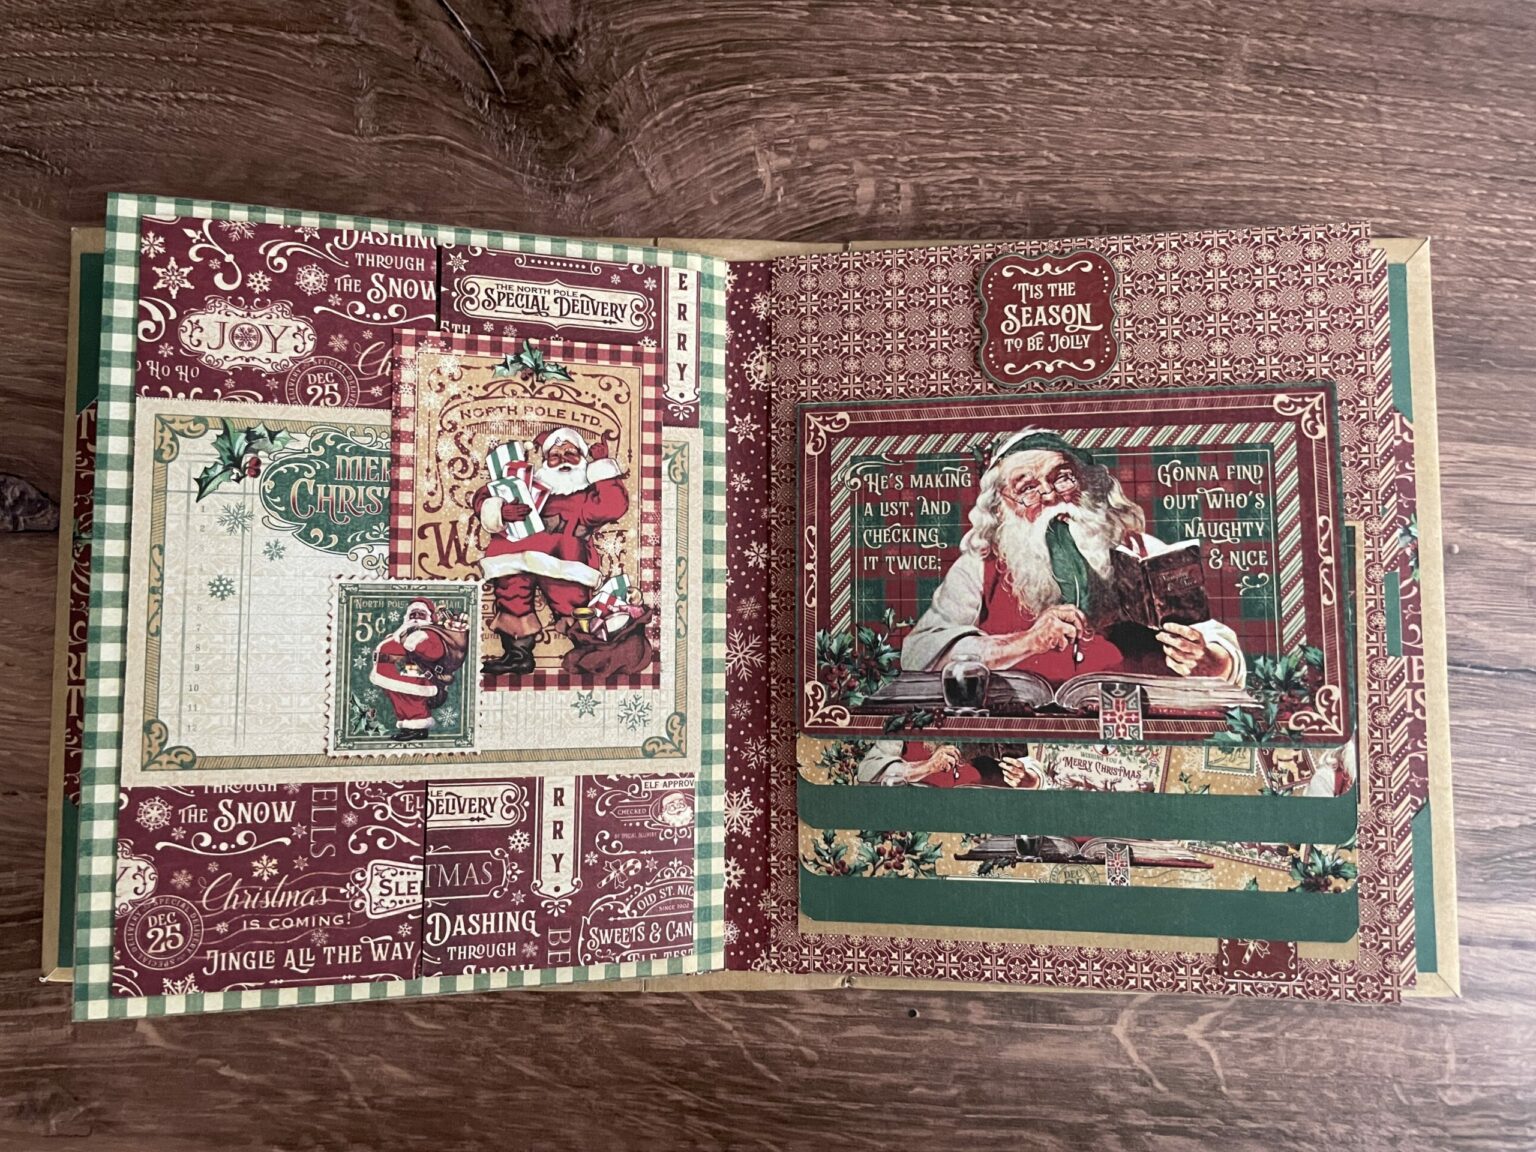 Graphic 45 Letters to Santa Keepsake Album Monthly Kit 2023 Vol 10